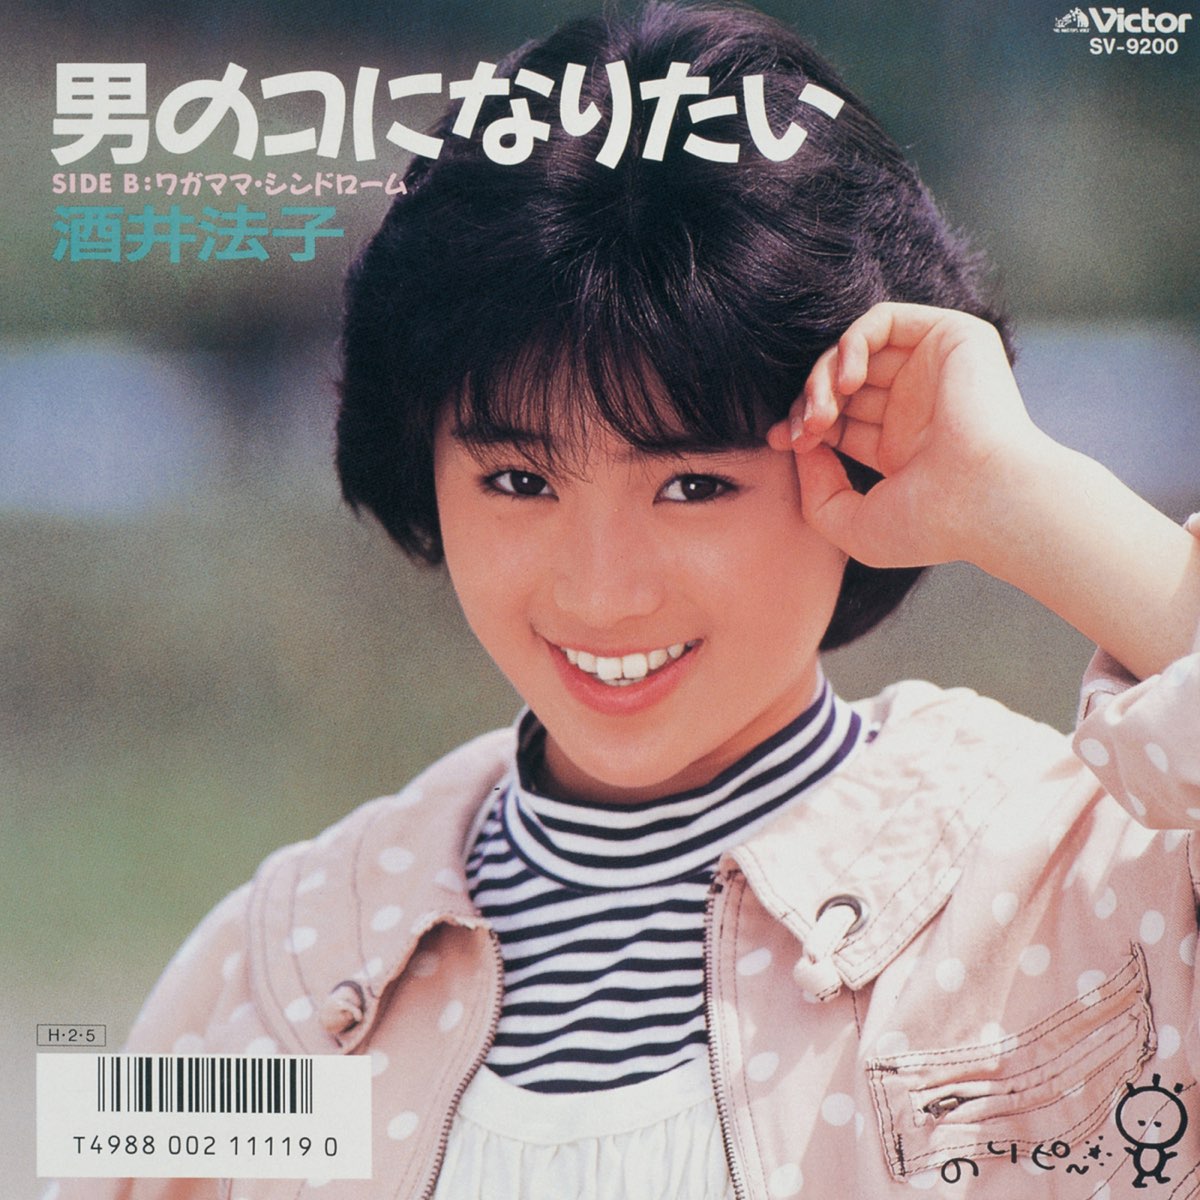 ‎Otokonoko Ni Naritai - EP by Noriko Sakai on Apple Music